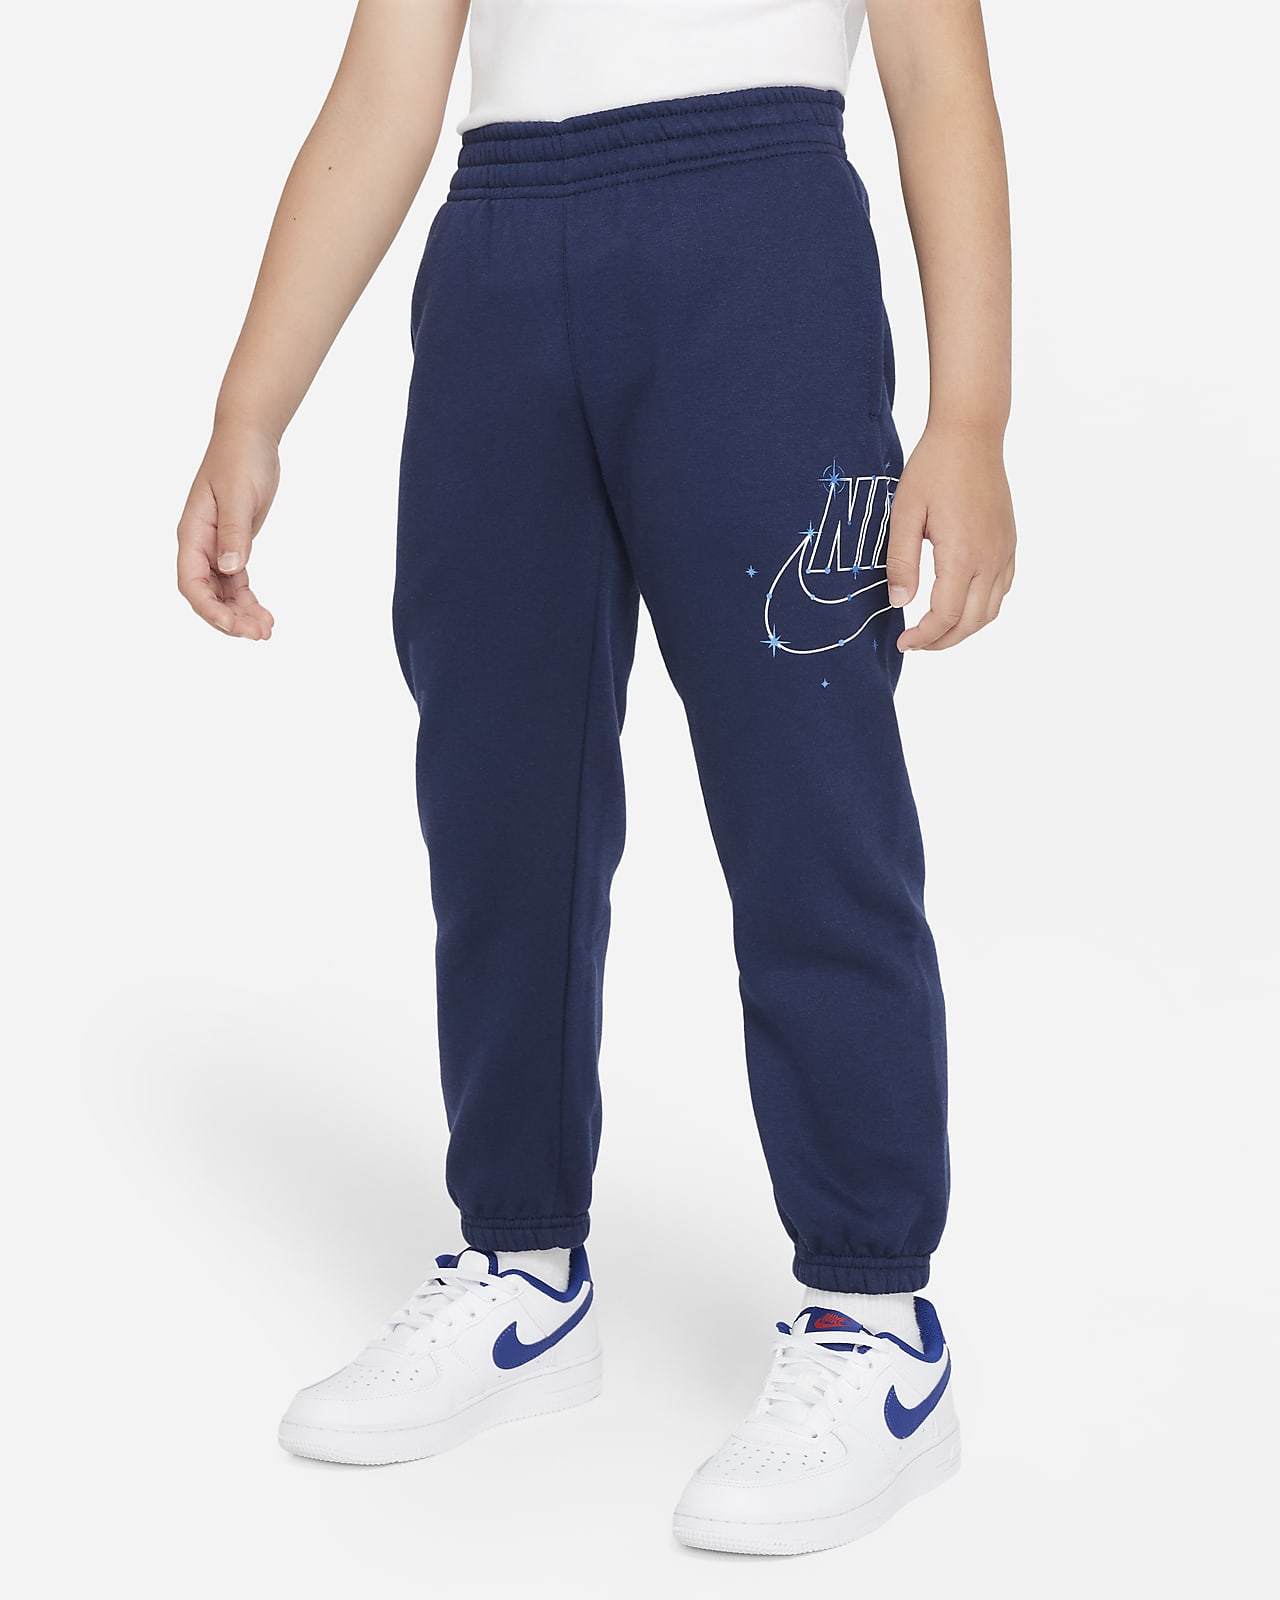 Pantaloni Nike Sportswear Shine Fleece – Bambino/a